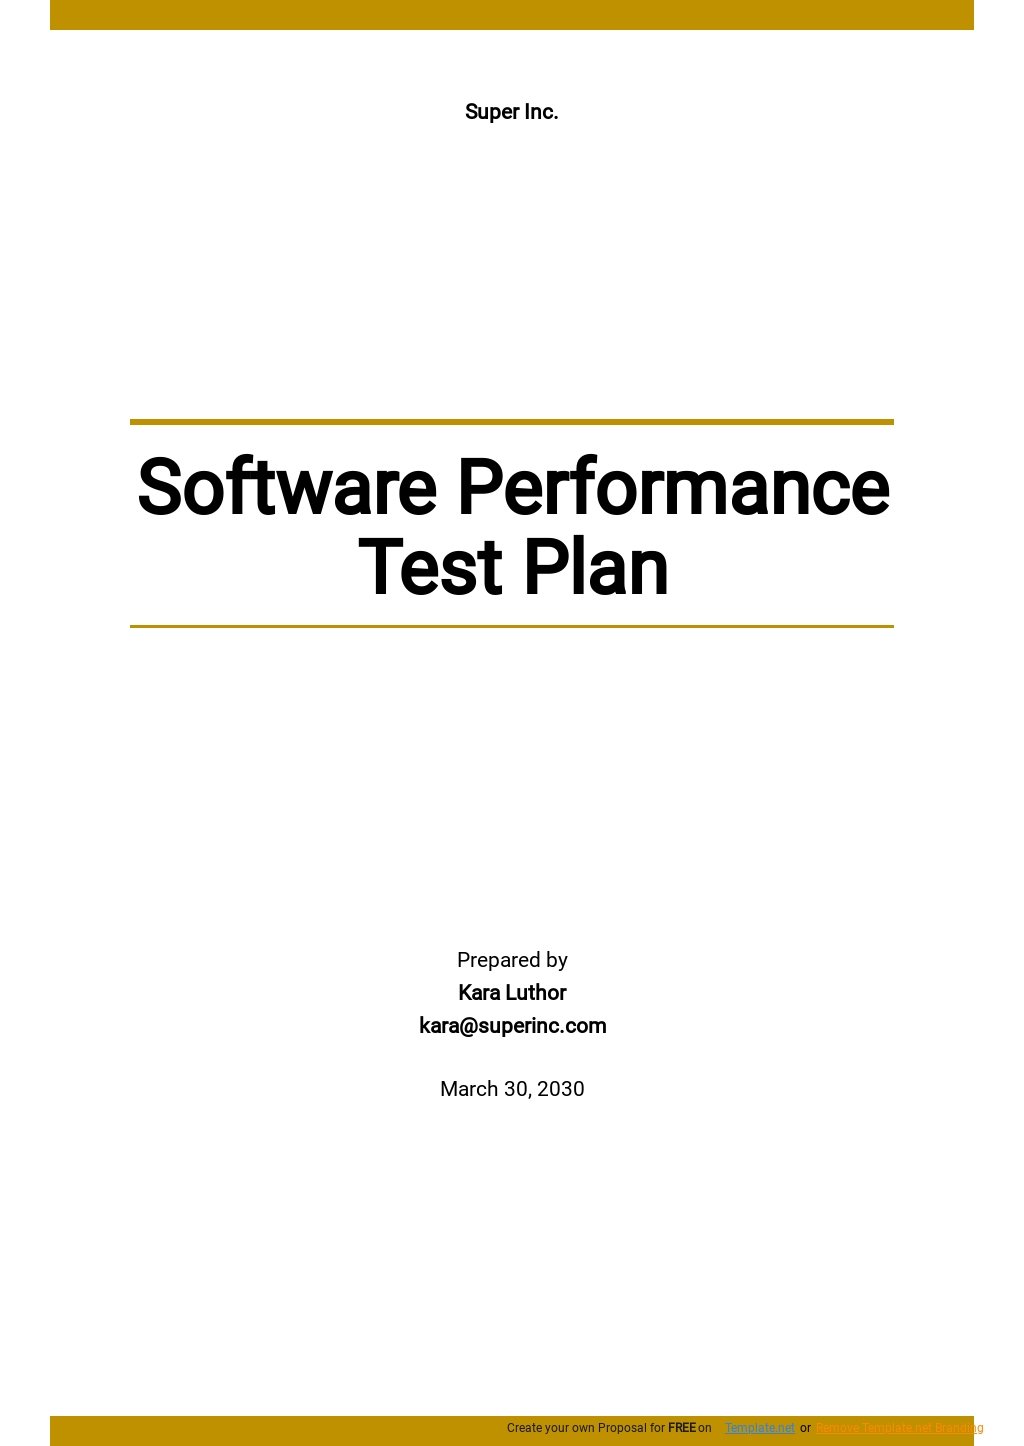 Software Performance Test Plan Template